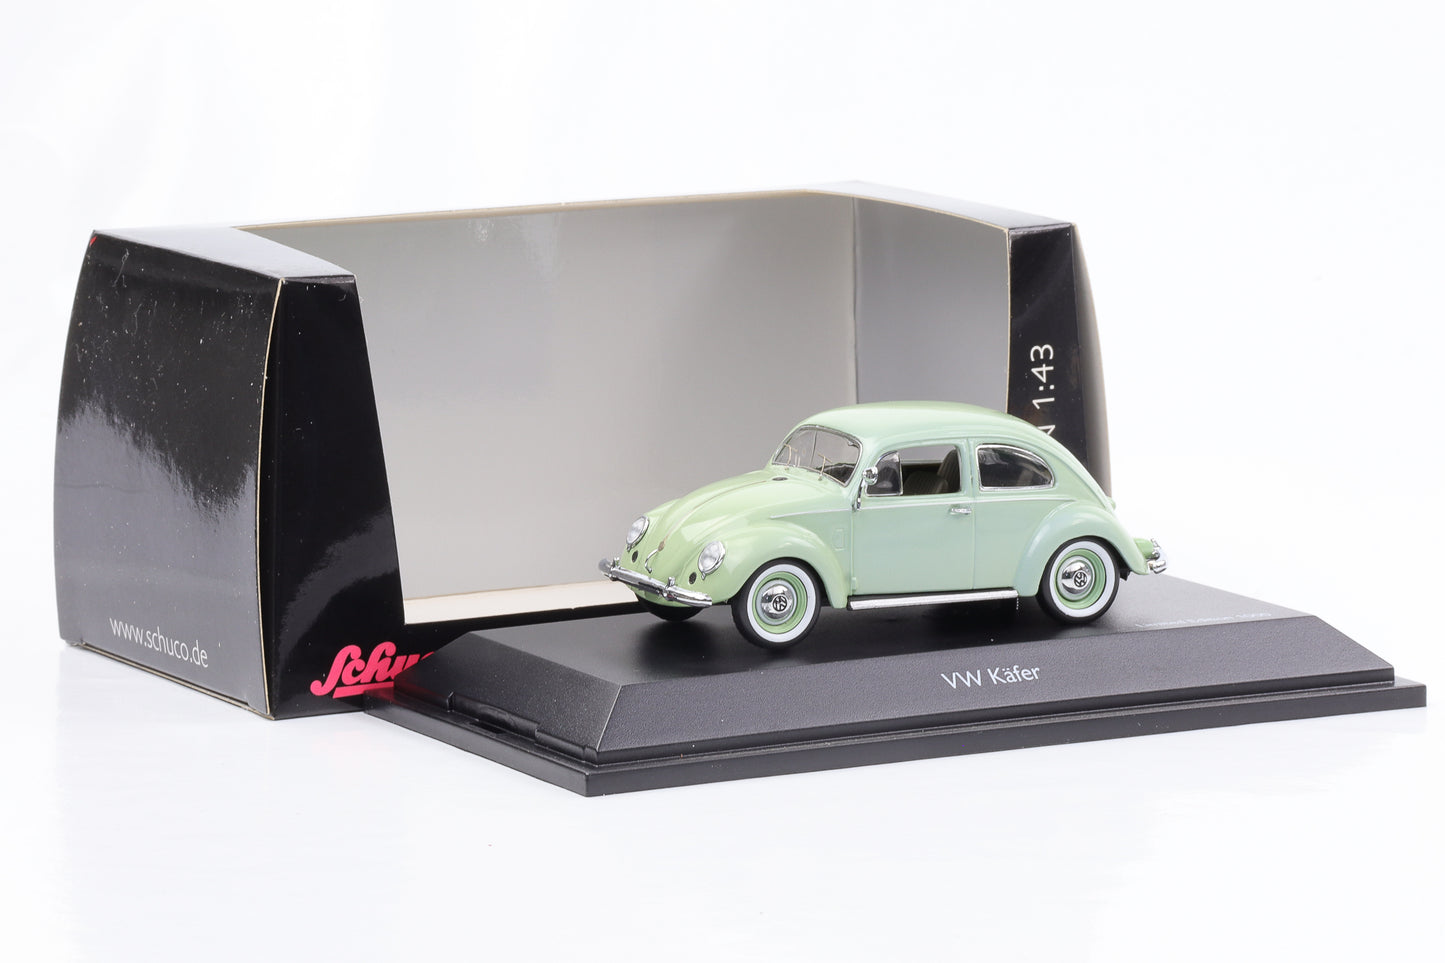 1:43 VW Beetle mint green Schuco diecast 450336700